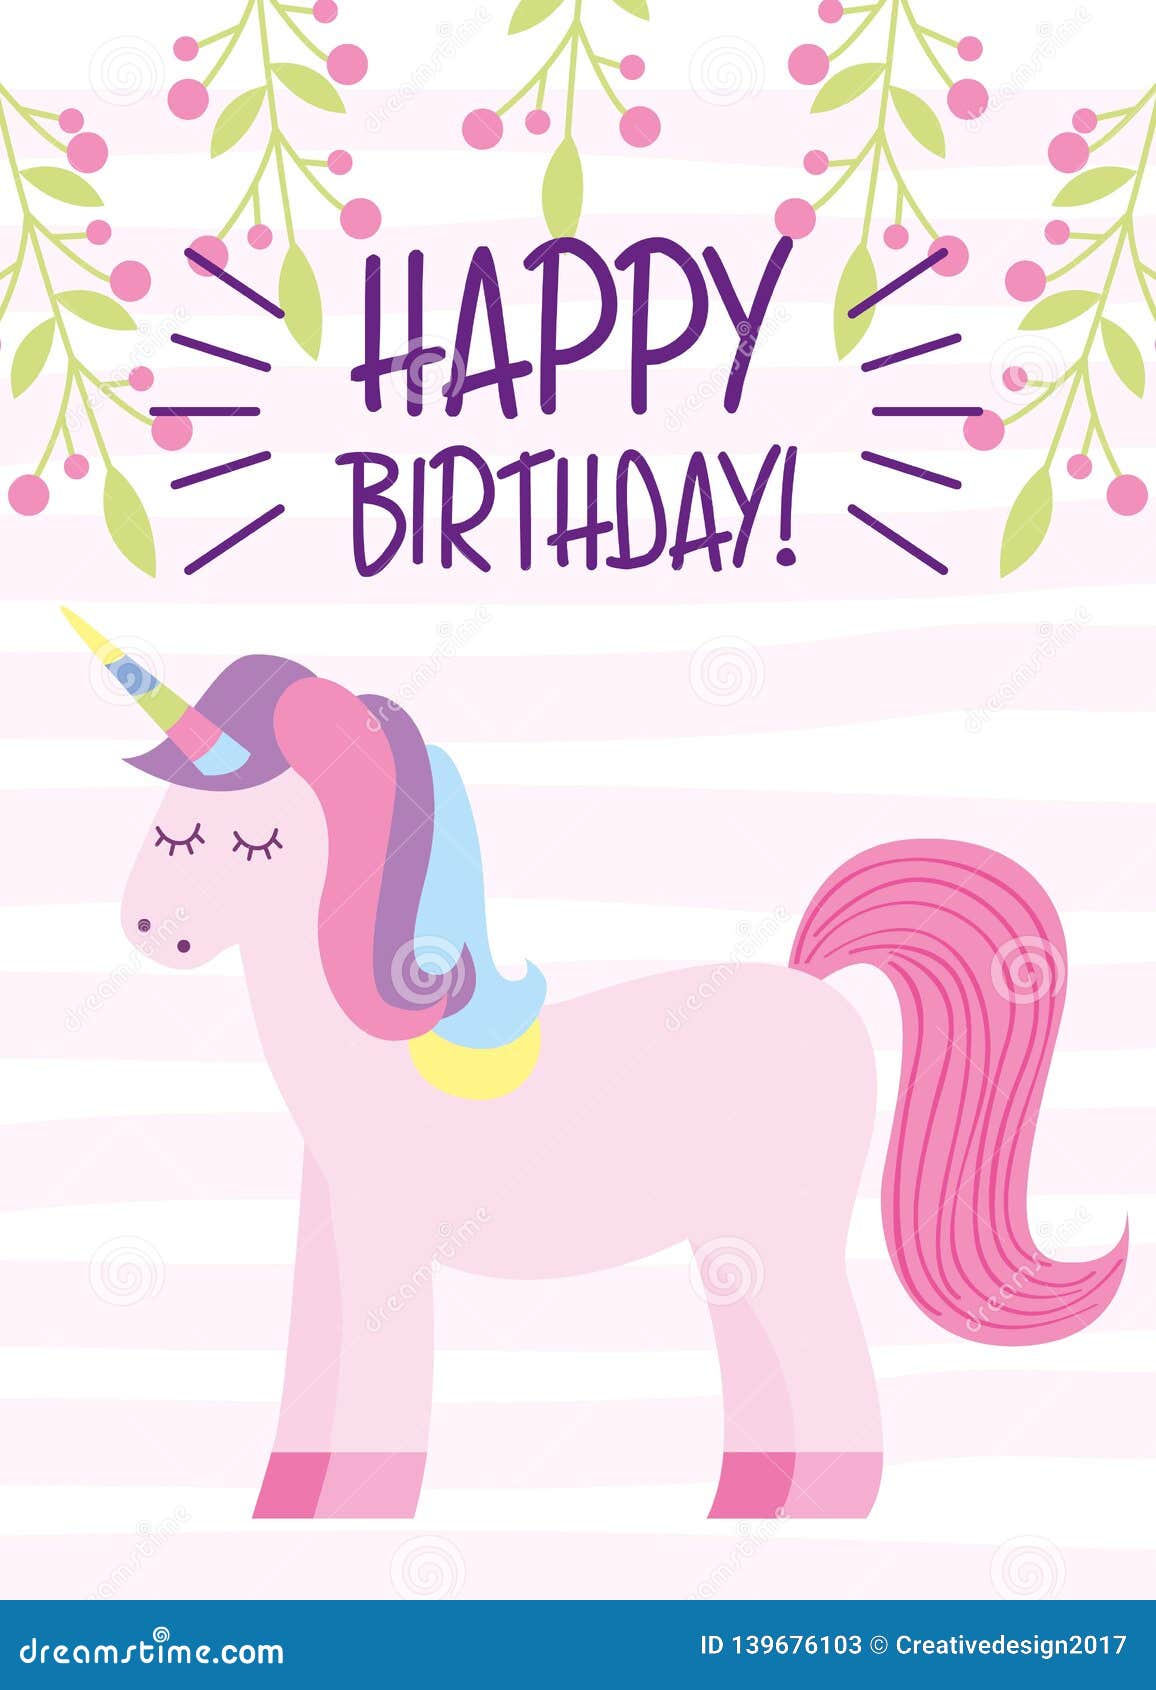 Happy birthday card stock vector. Illustration of fairy - 139676103